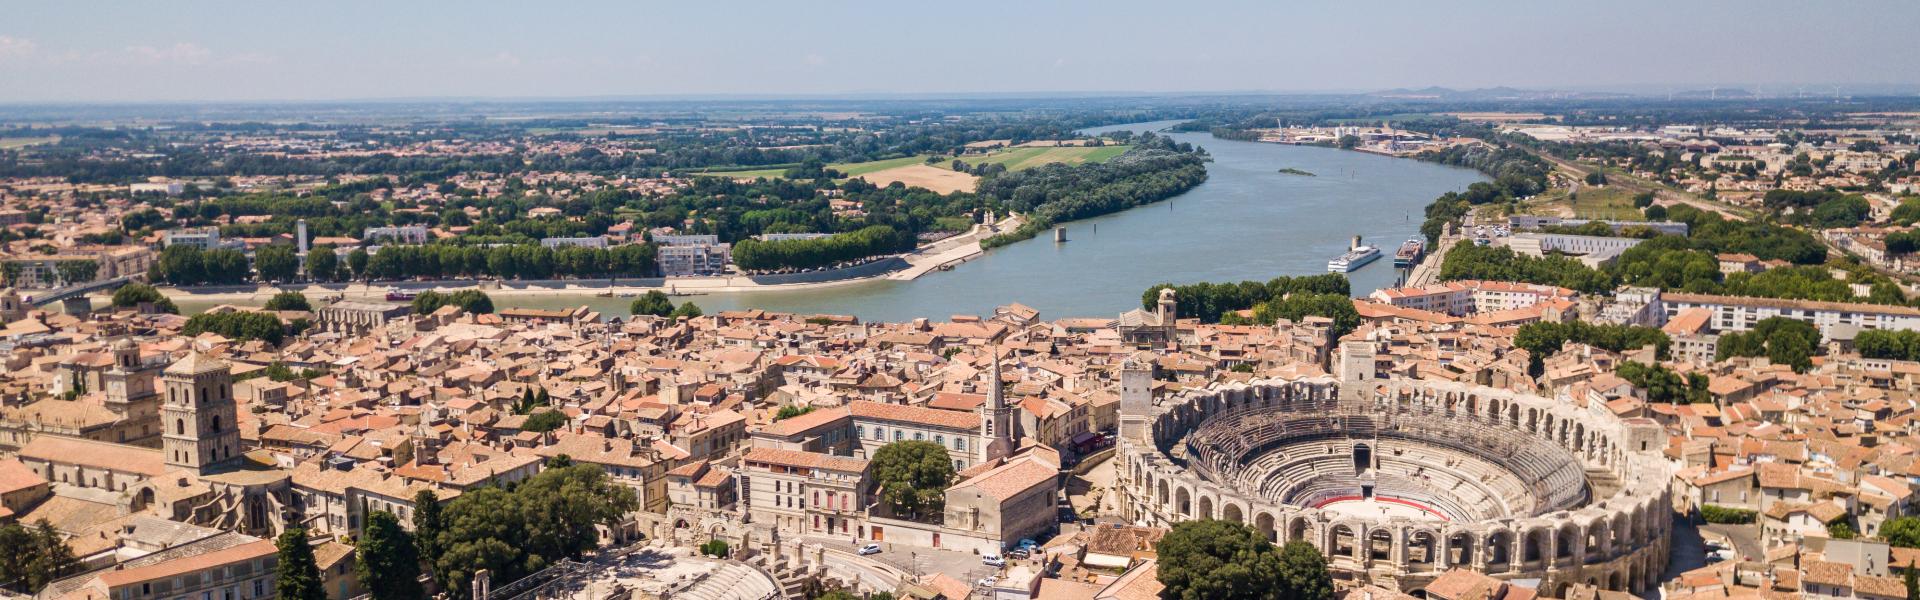 Arles vakantiehuizen en Arles vakantiewoningen - Casamundo